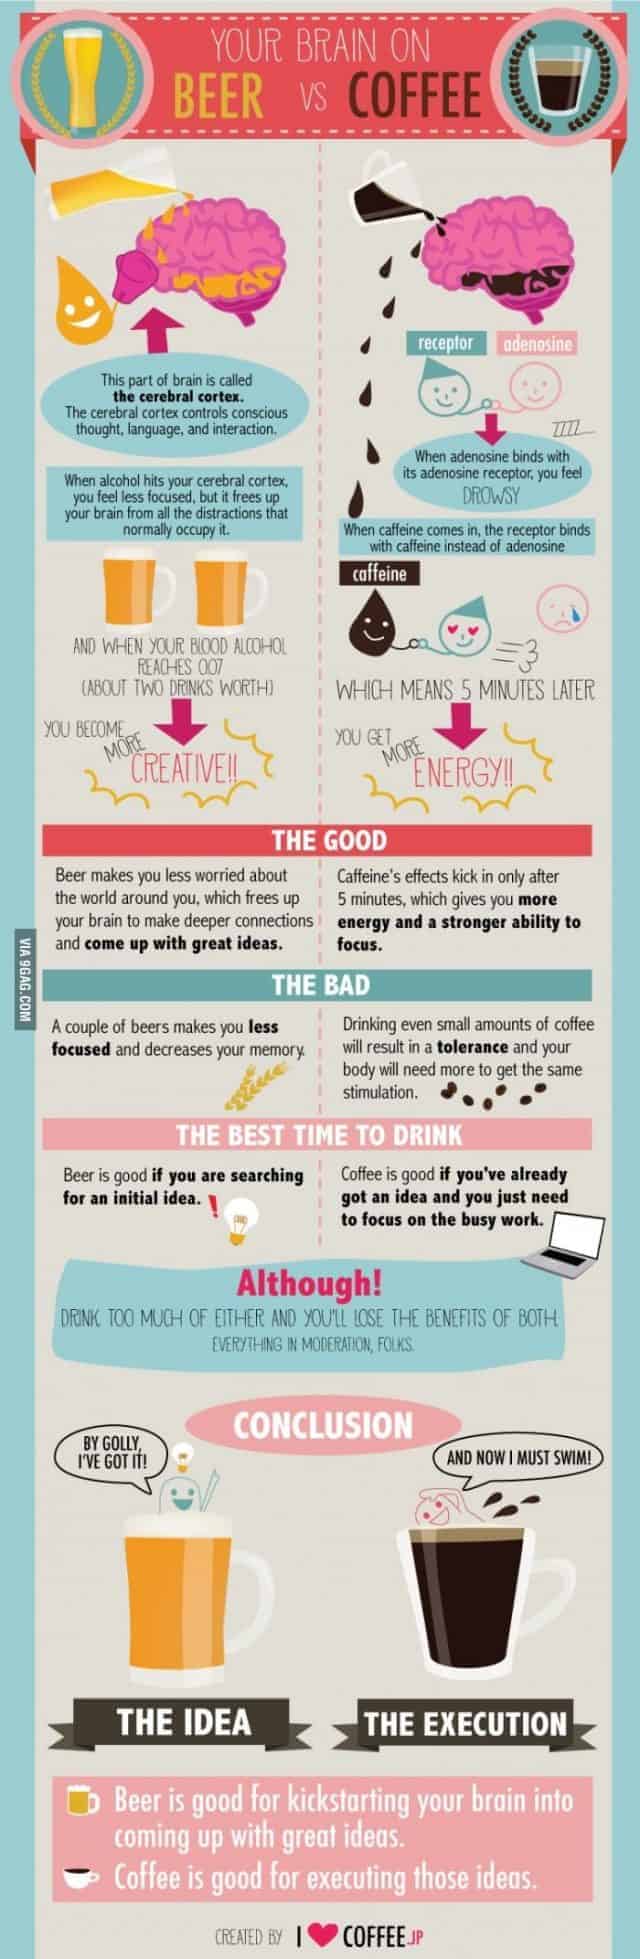 Beer vs coffee infographic